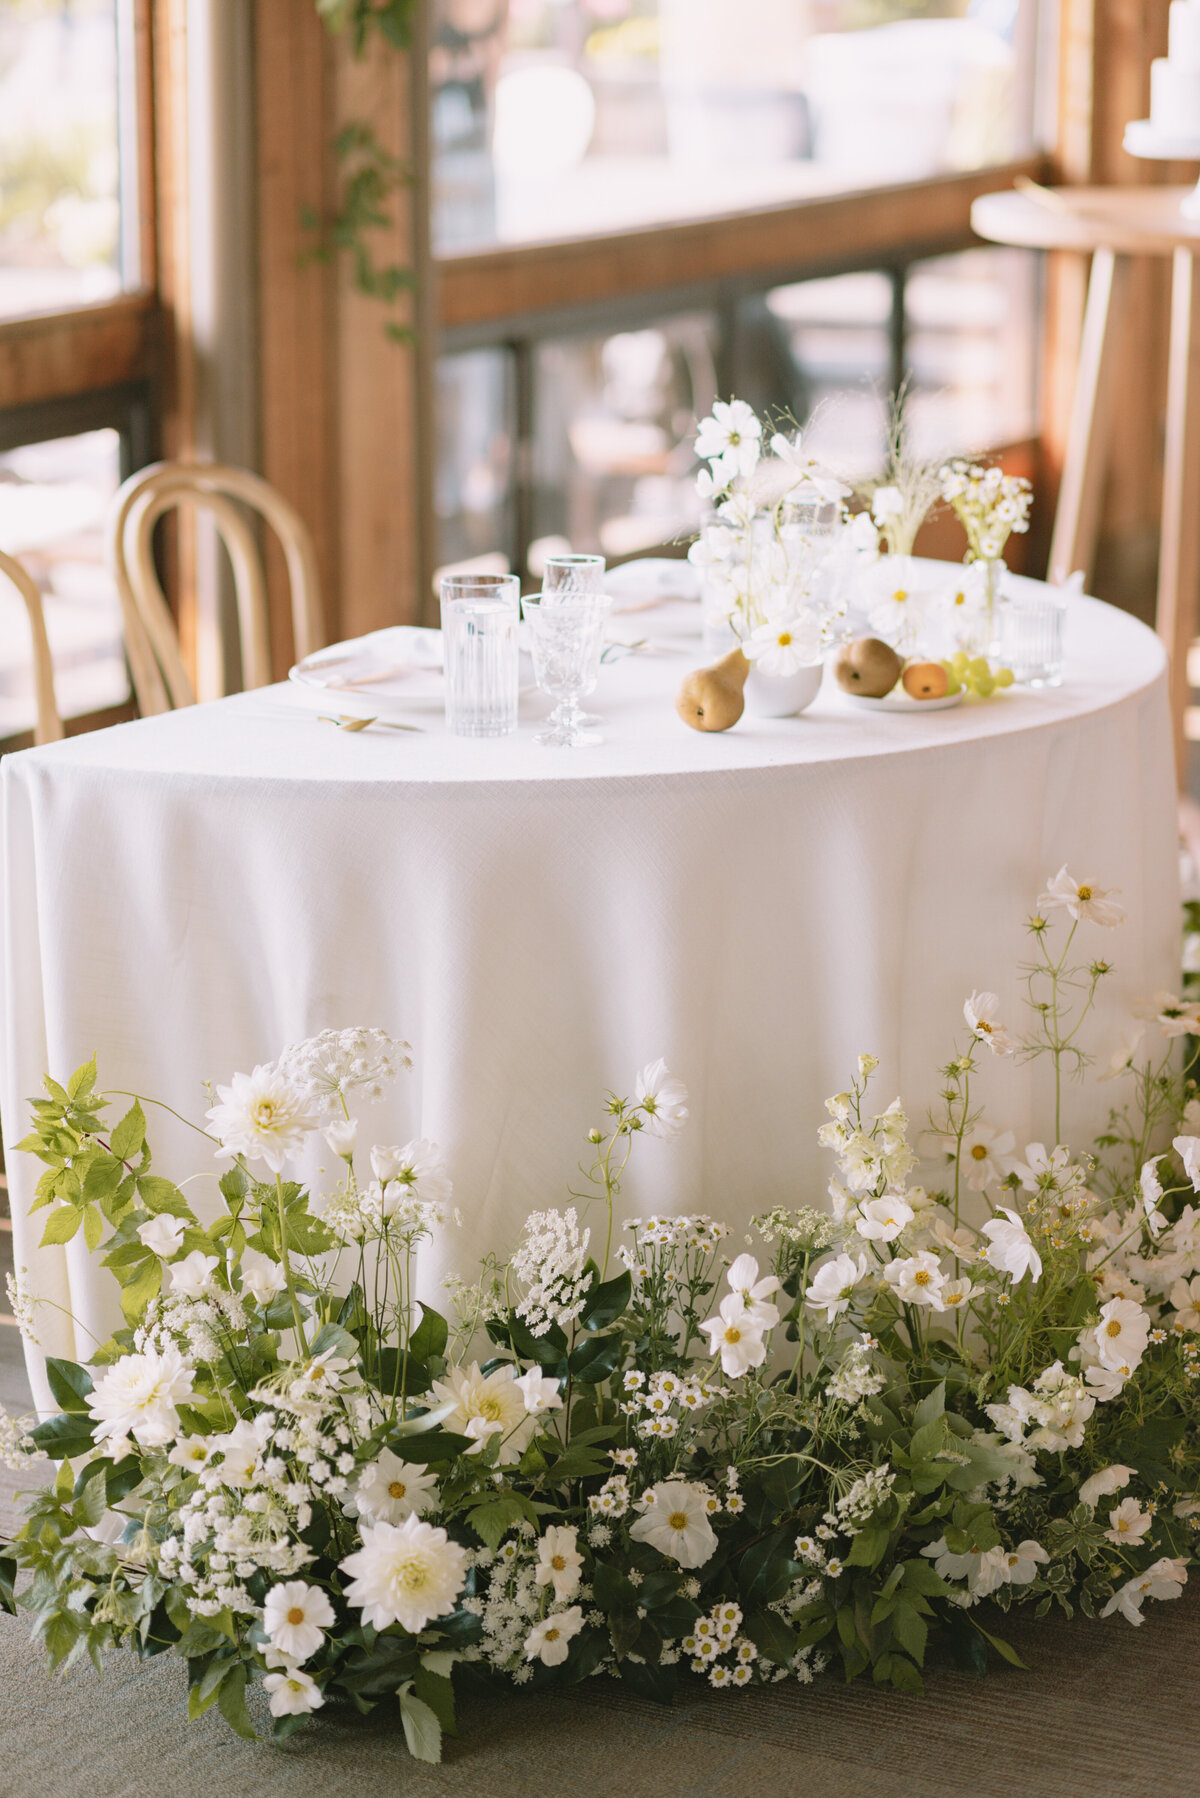 Custom Wedding Design for Summer Wedding Reception at Pinebrook Golf Club, Calgary, summer wedding ideas, sweetheart table